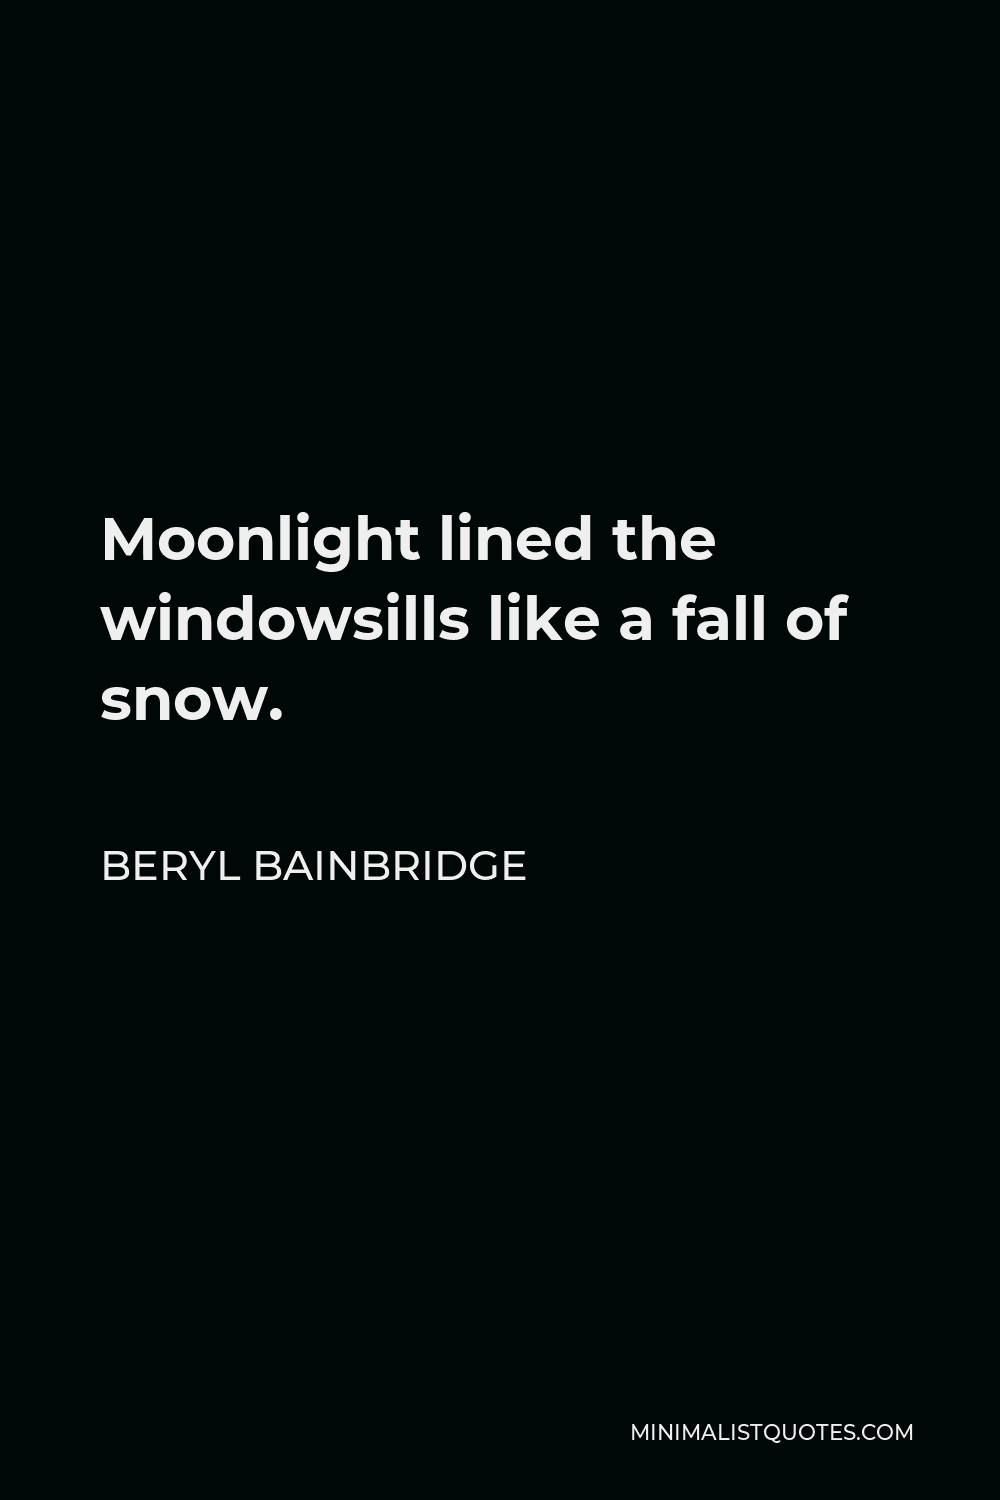 Beryl Bainbridge Quote - Moonlight lined the windowsills like a fall of snow.